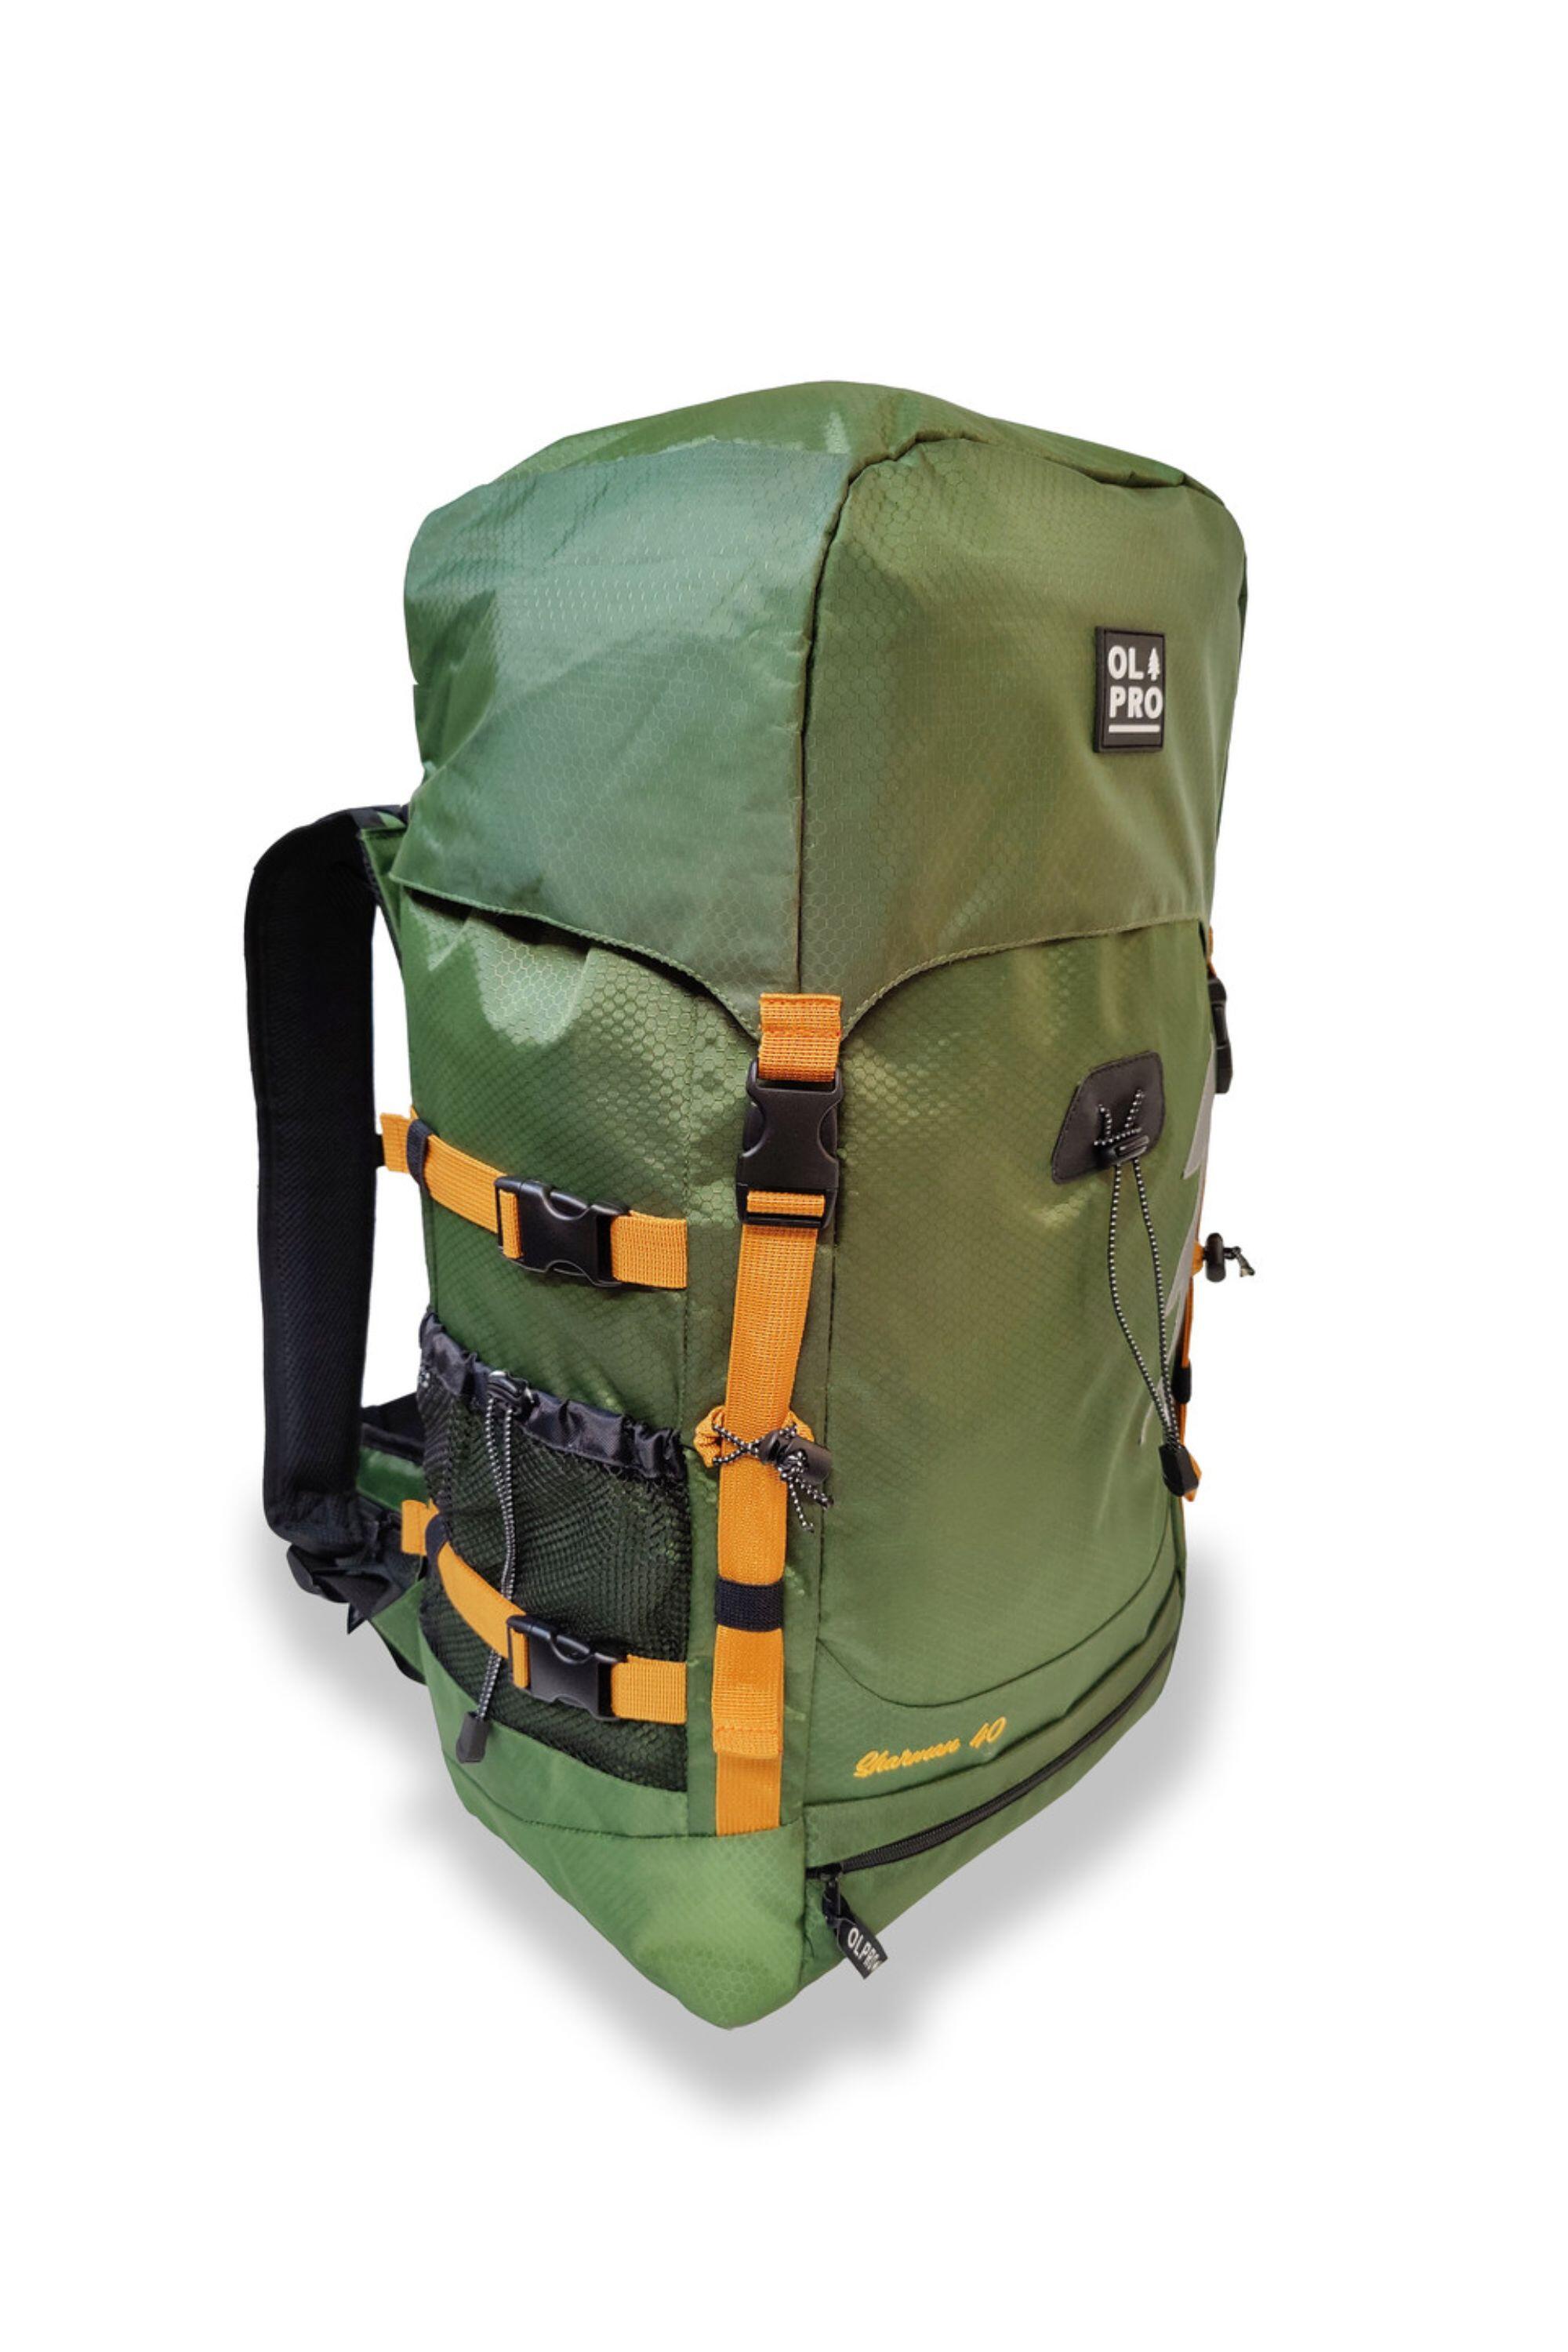 OLPRO 40L Rucksack Bag Green 2/4